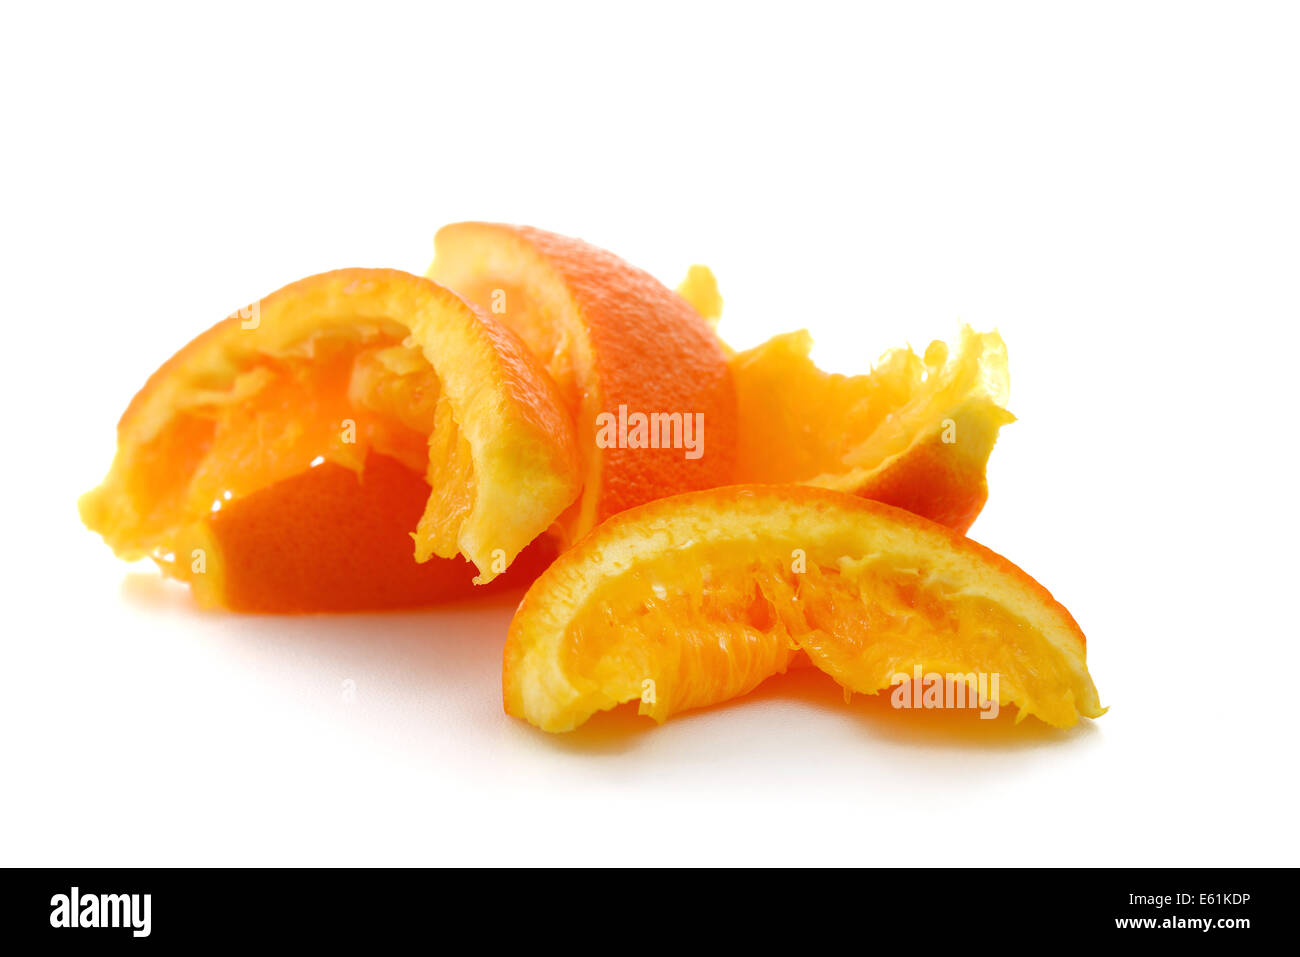 orange peel after eating Stock Photo